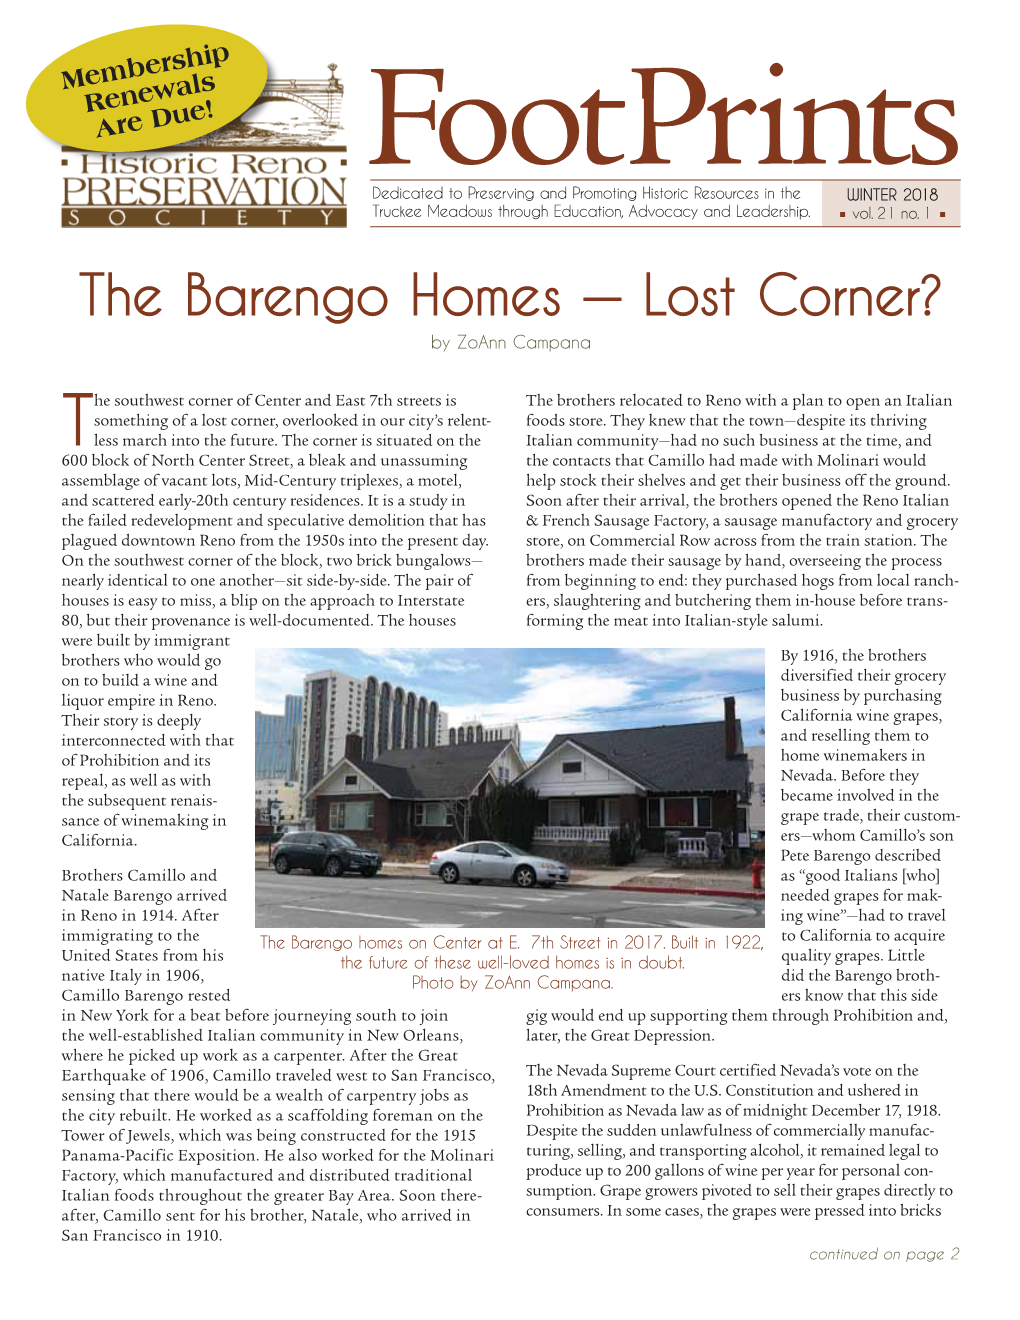 The Barengo Homes — Lost Corner? by Zoann Campana